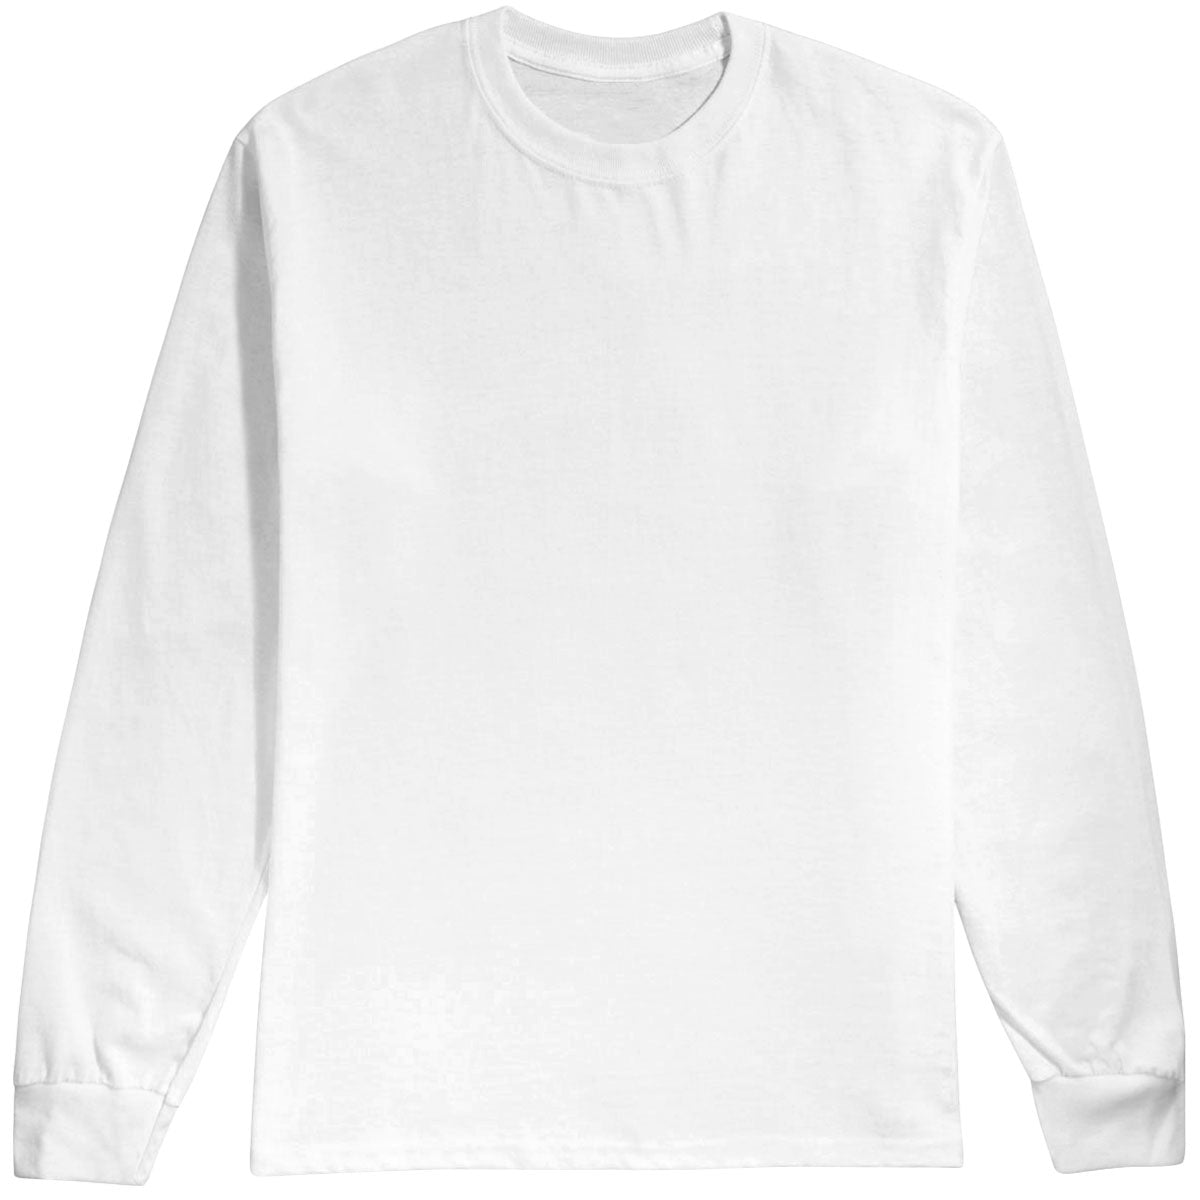 Alien Workshop Triad Sticker Long Sleeve T-Shirt - White - SM image 1